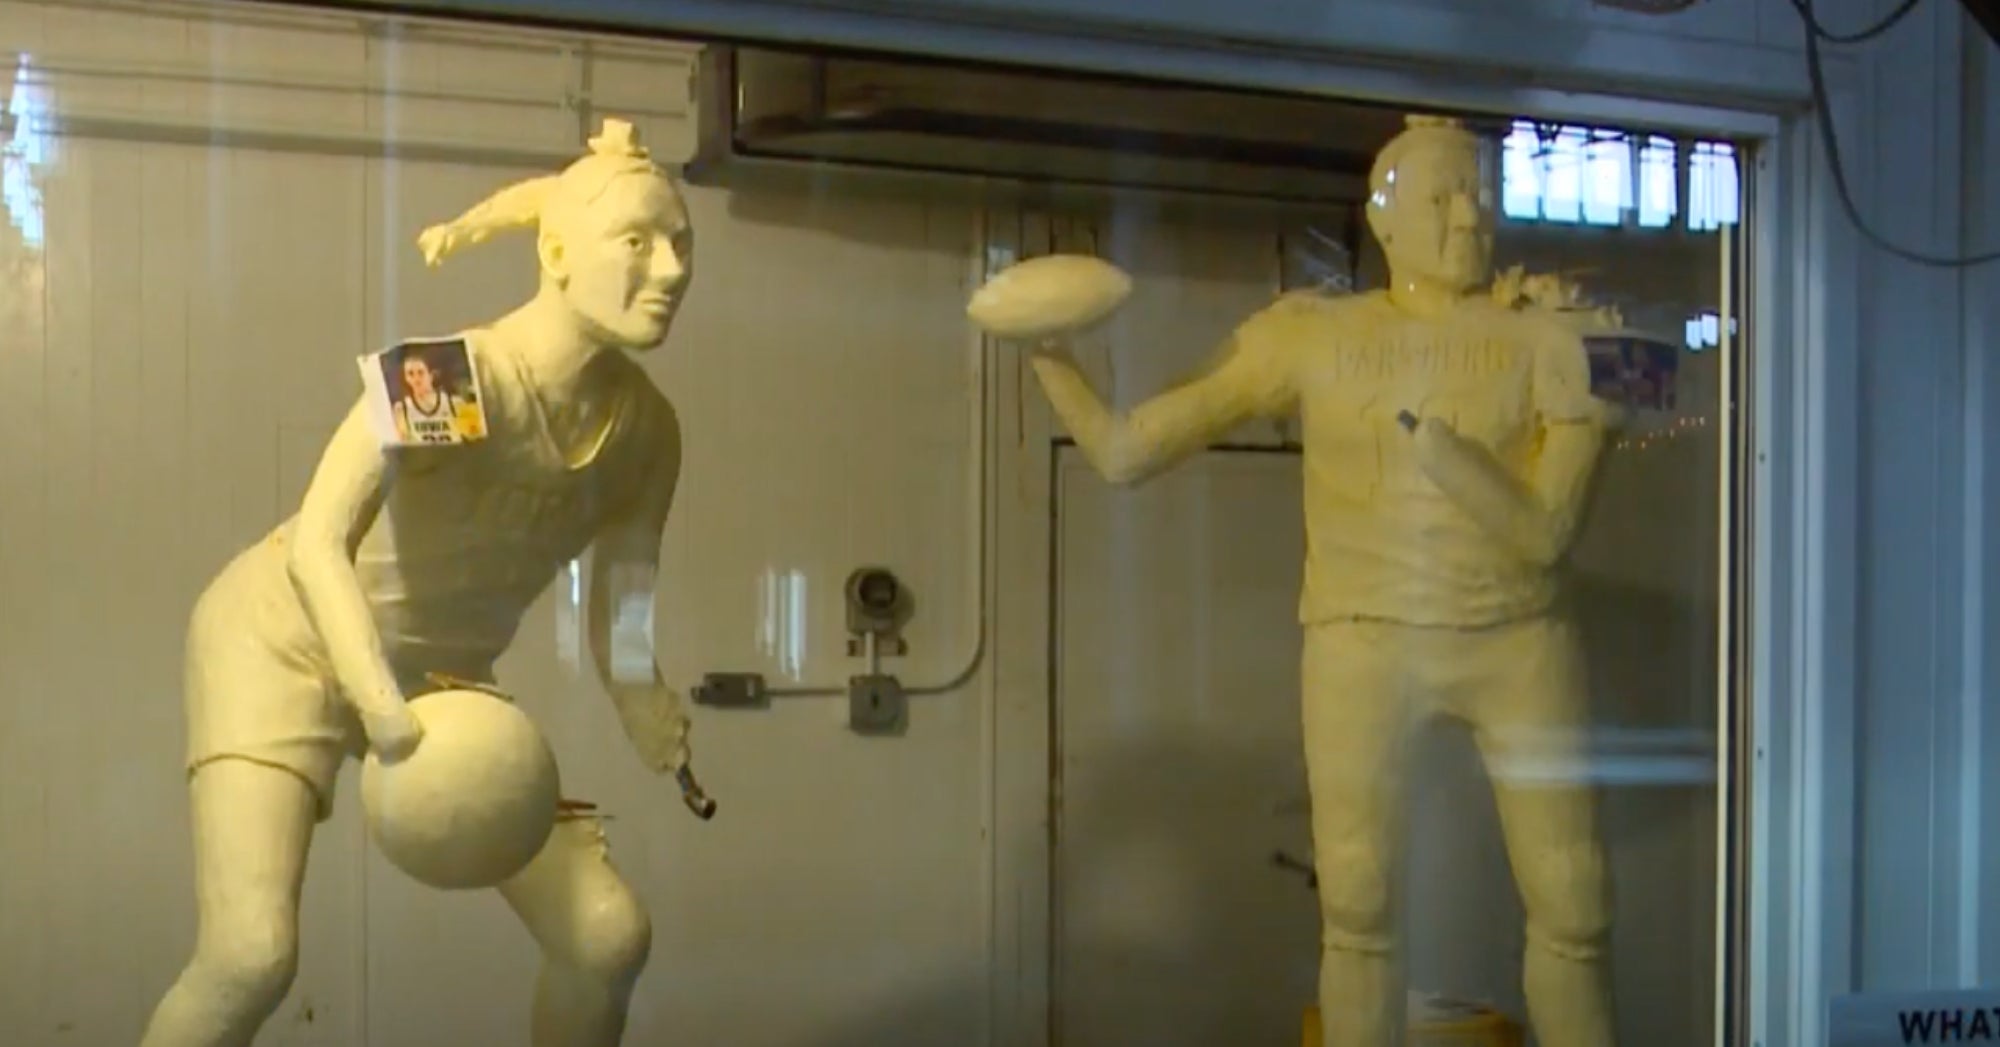 Iowa State Fair butter sculptures feature famous Iowa athletes